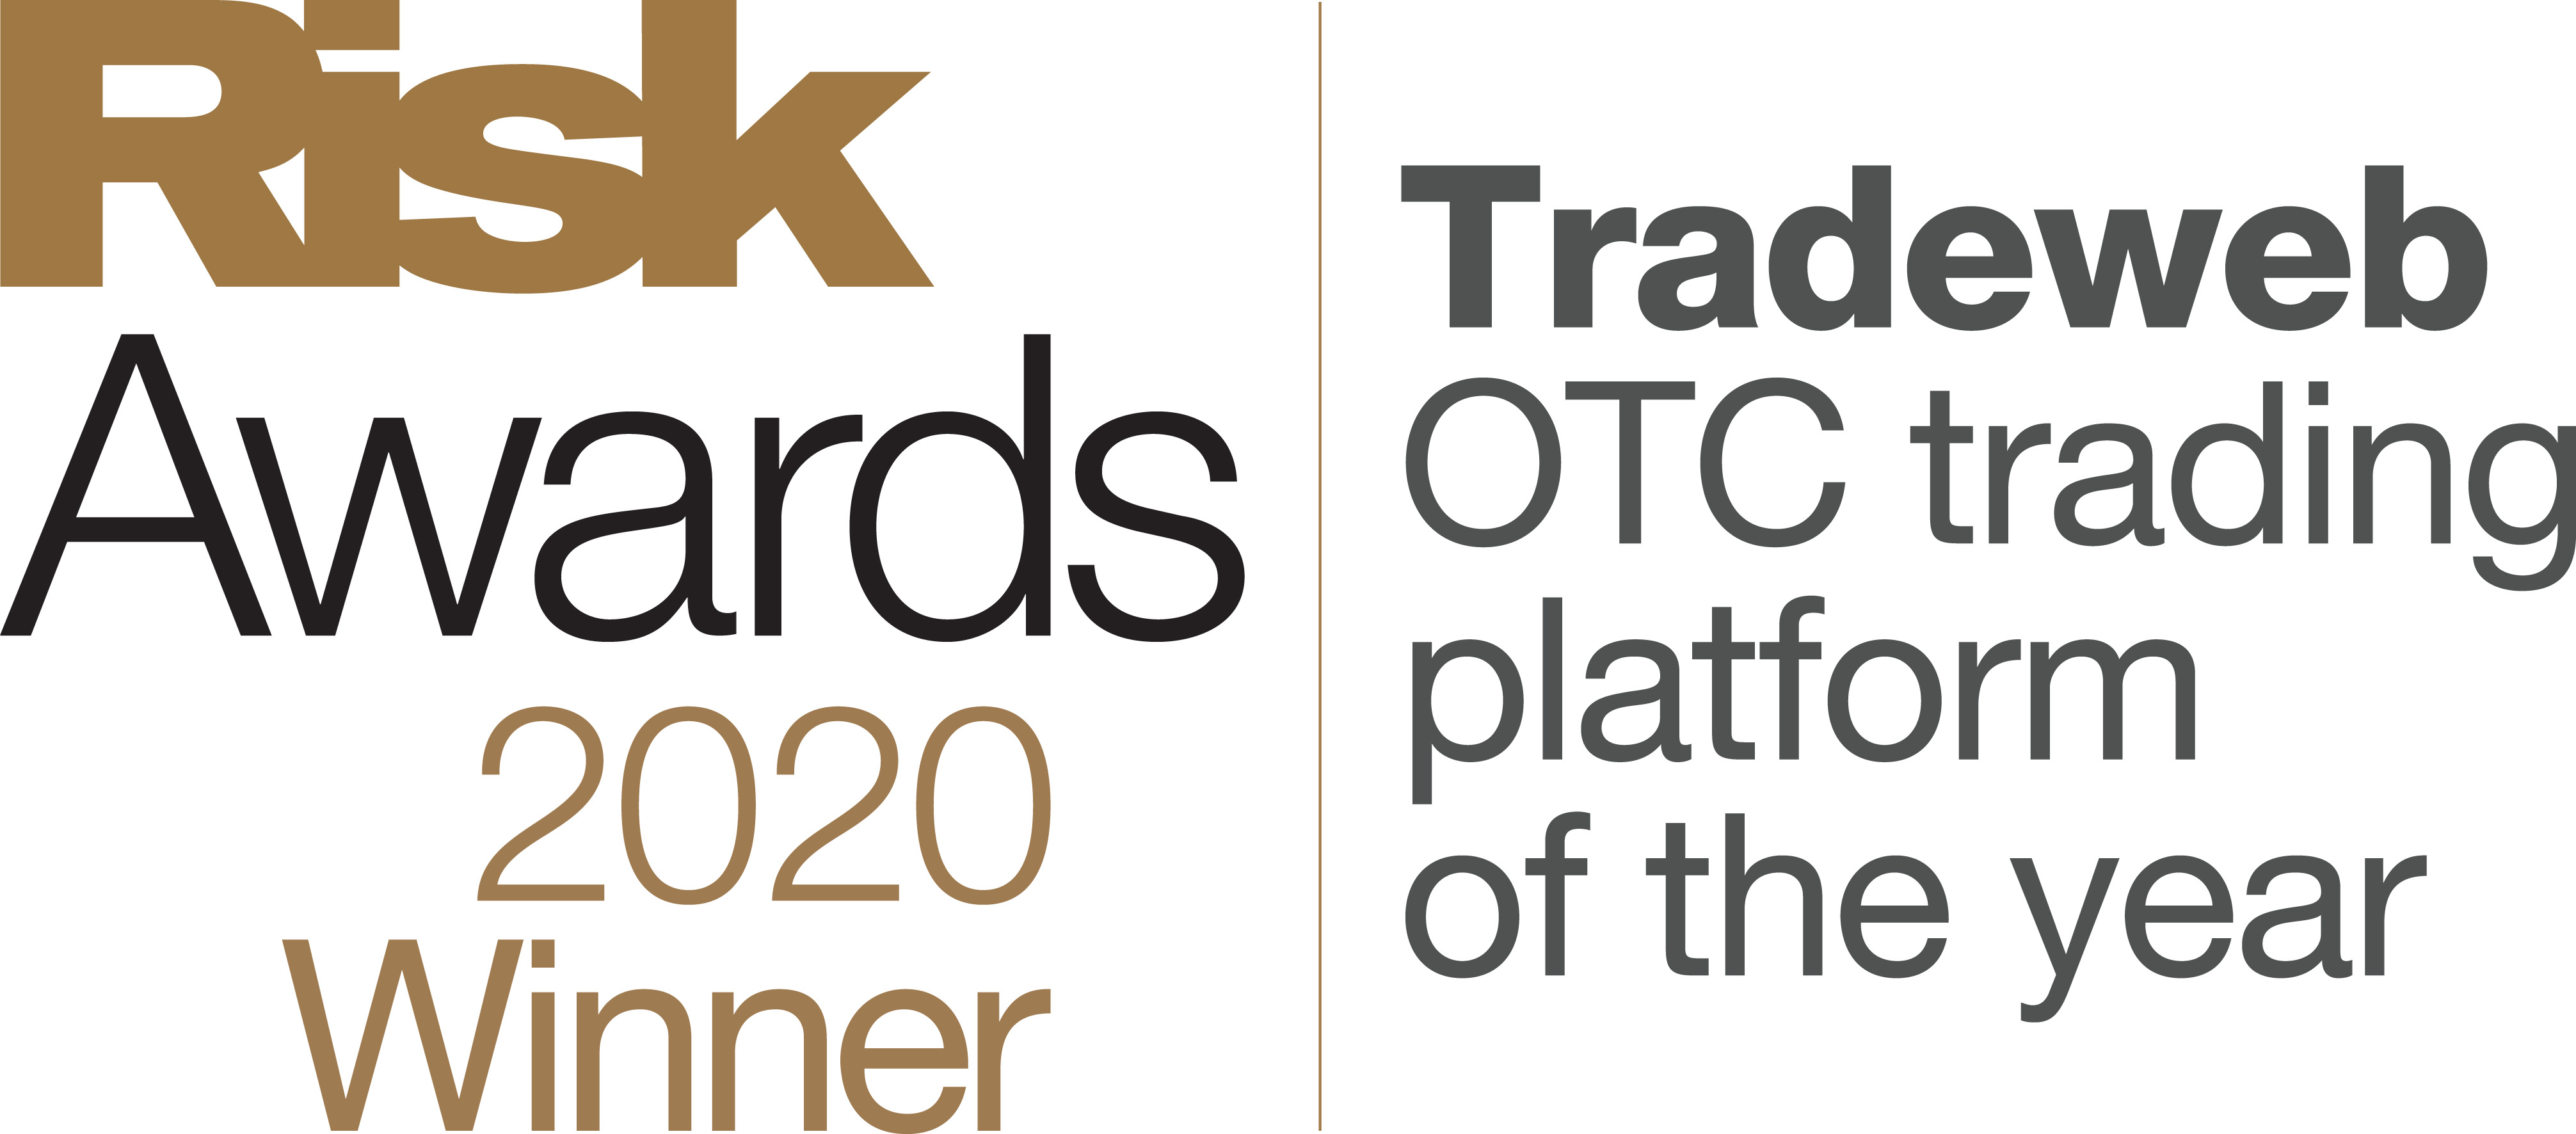 Risk Awards OTC Trading Platform of the Year